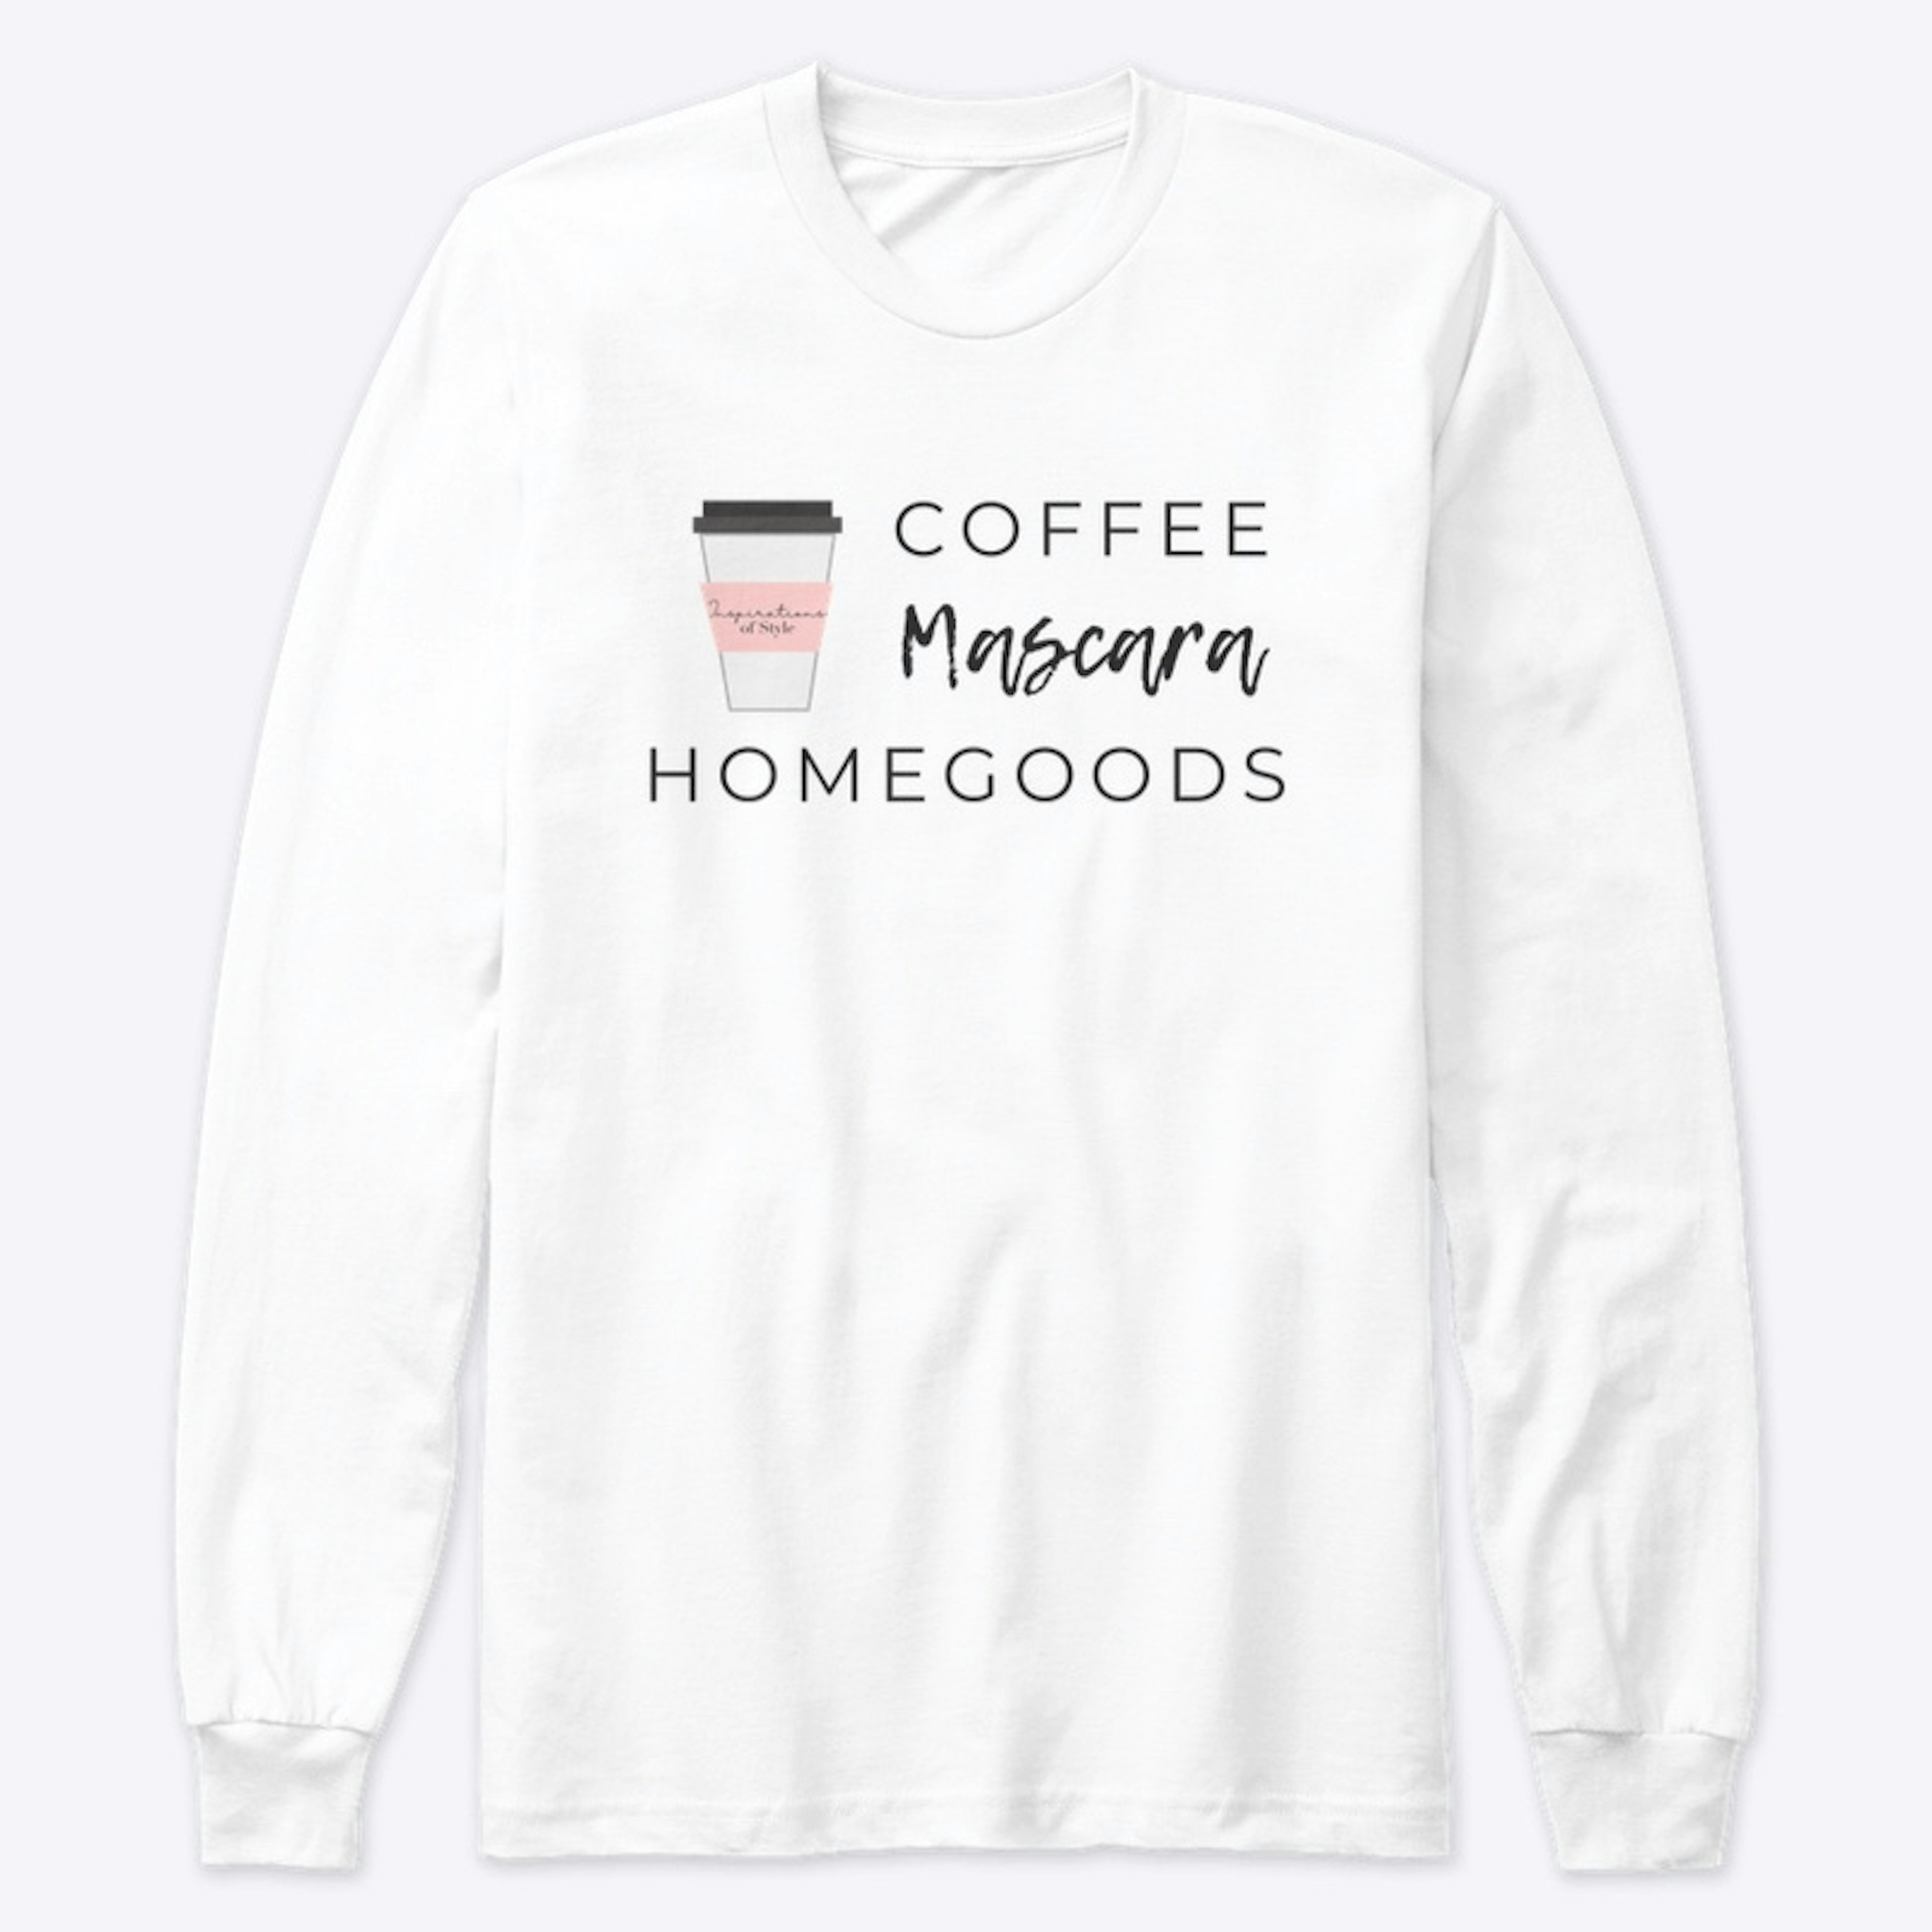 COFFEE, MASCARA, HOME GOODS